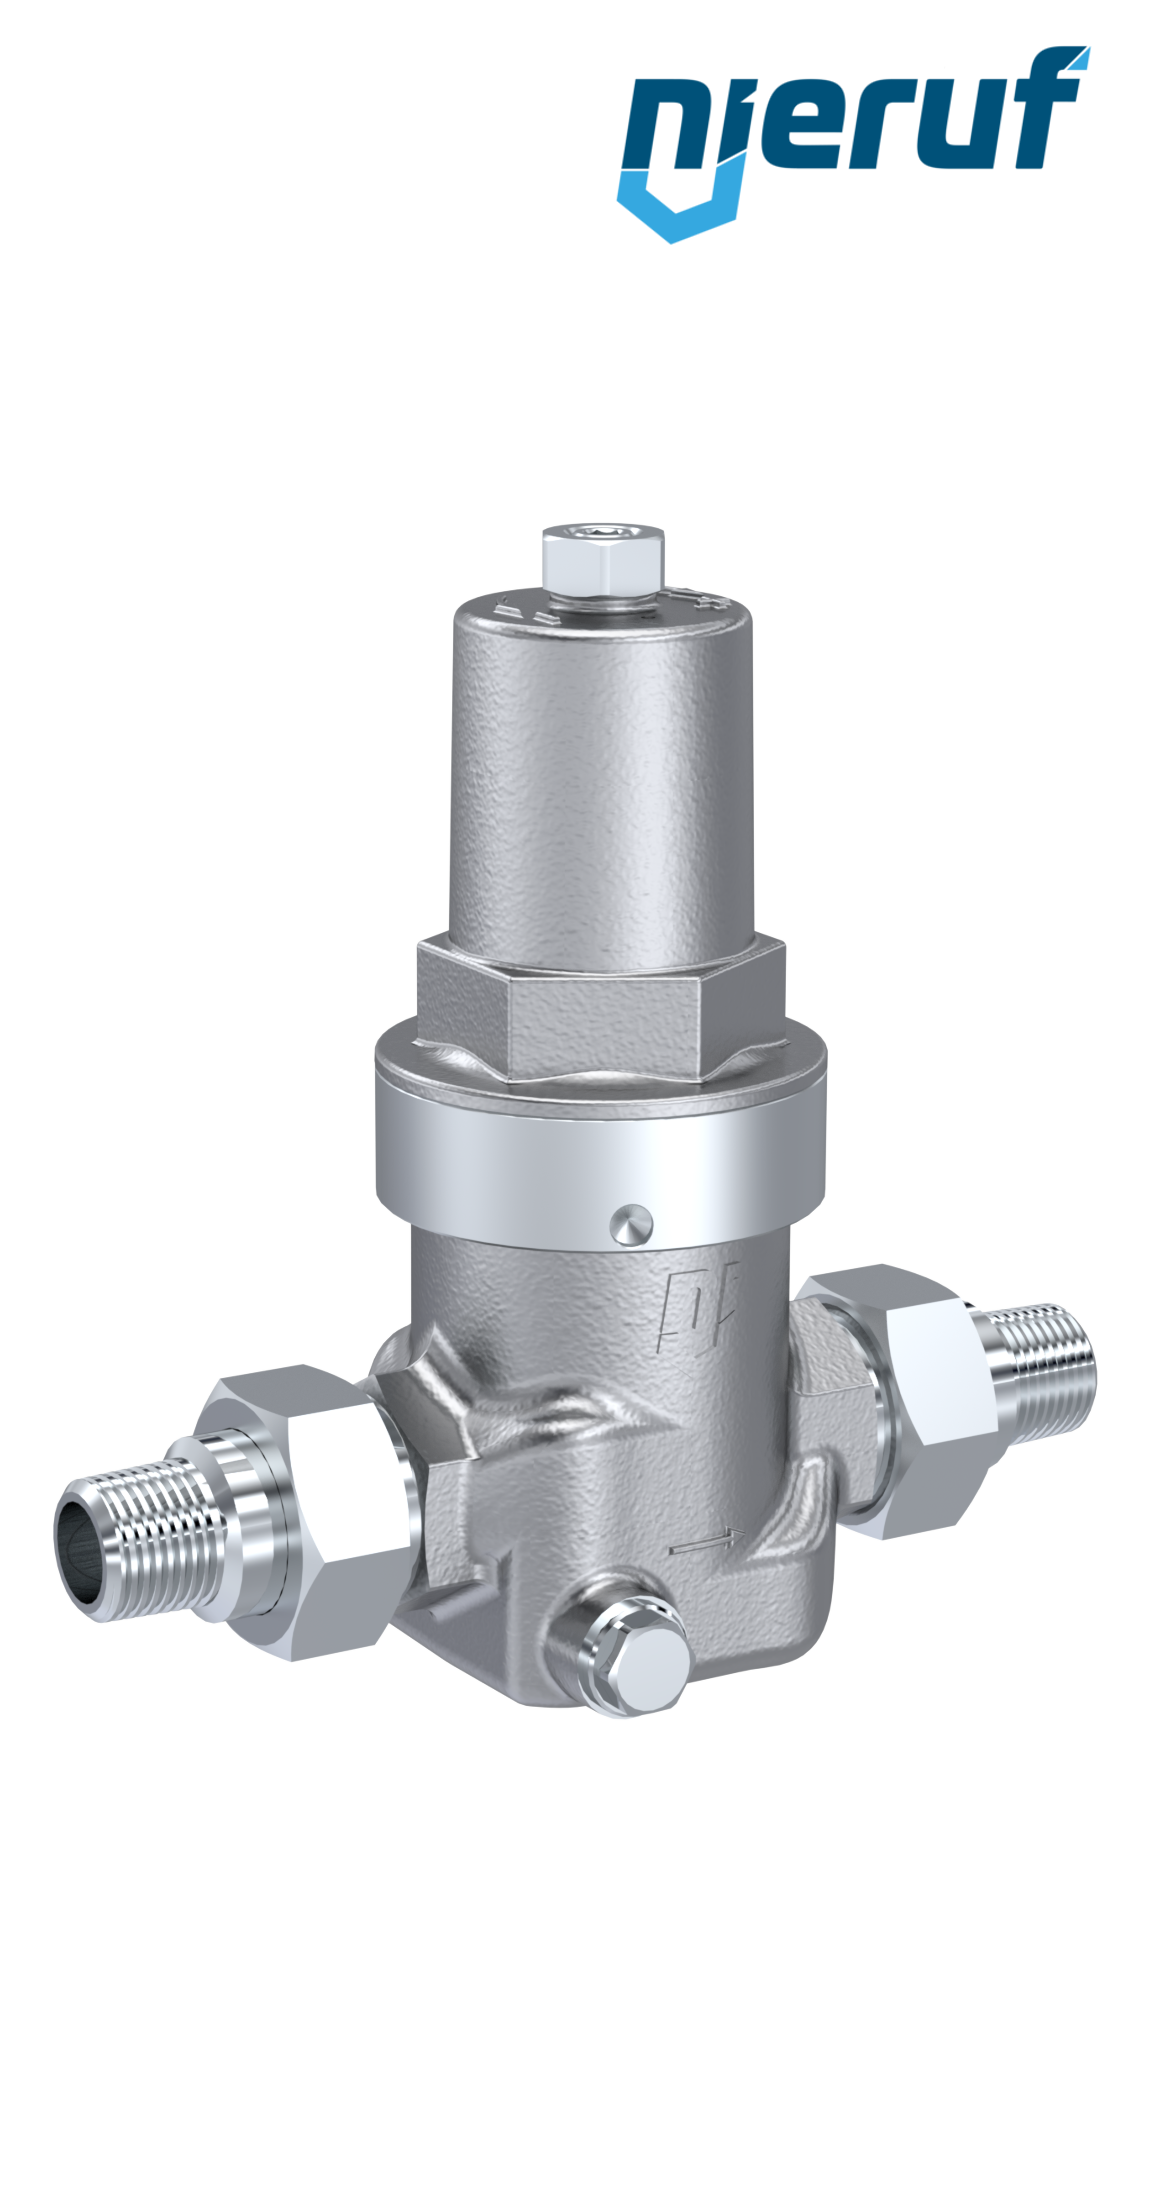 low-pressure reducing valve male thread 1/2" Inch DM12 stainless steel FPM 0.2 - 2.0 bar